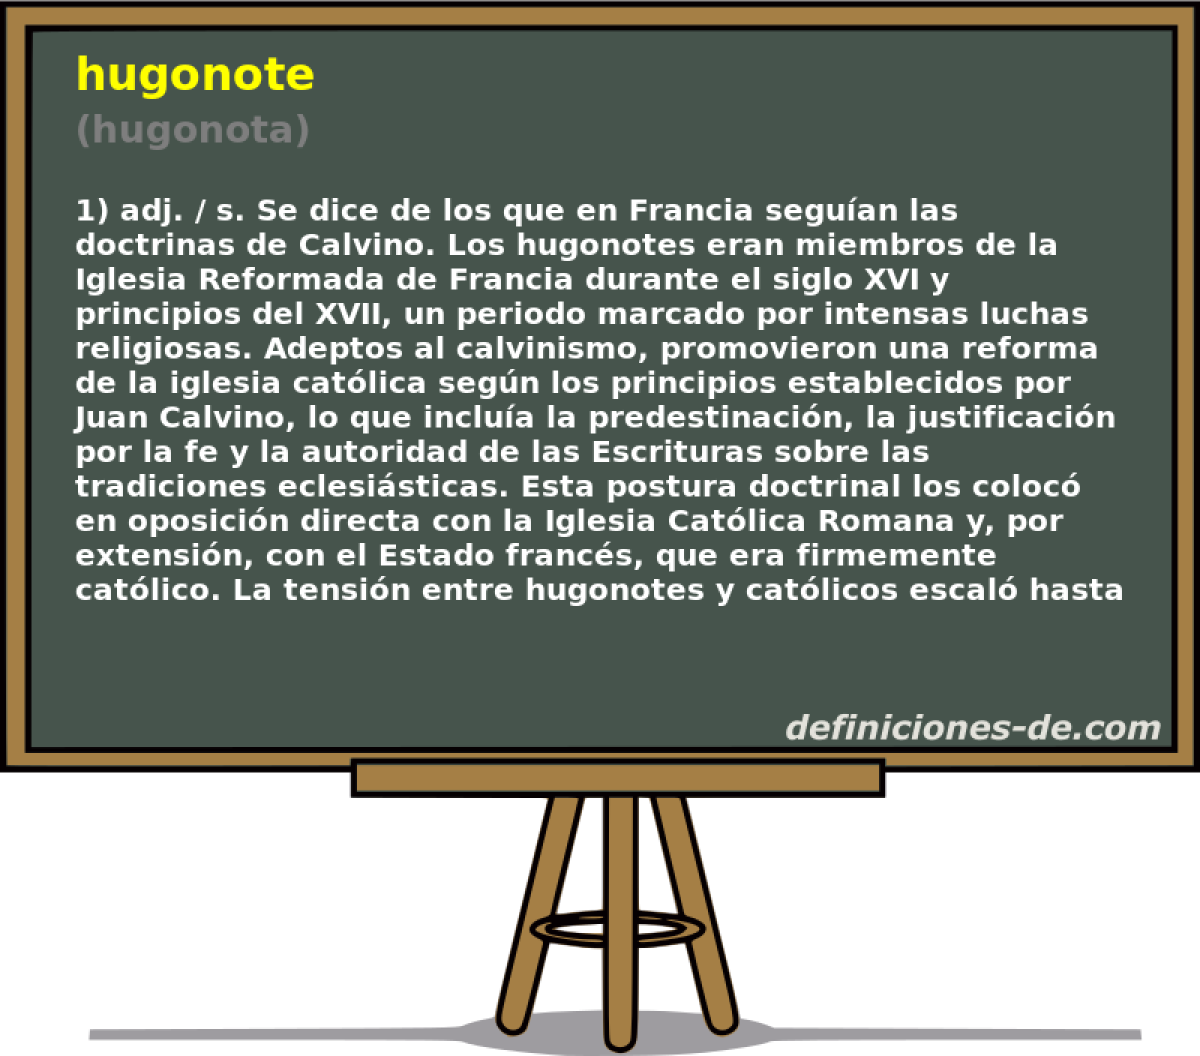 hugonote (hugonota)